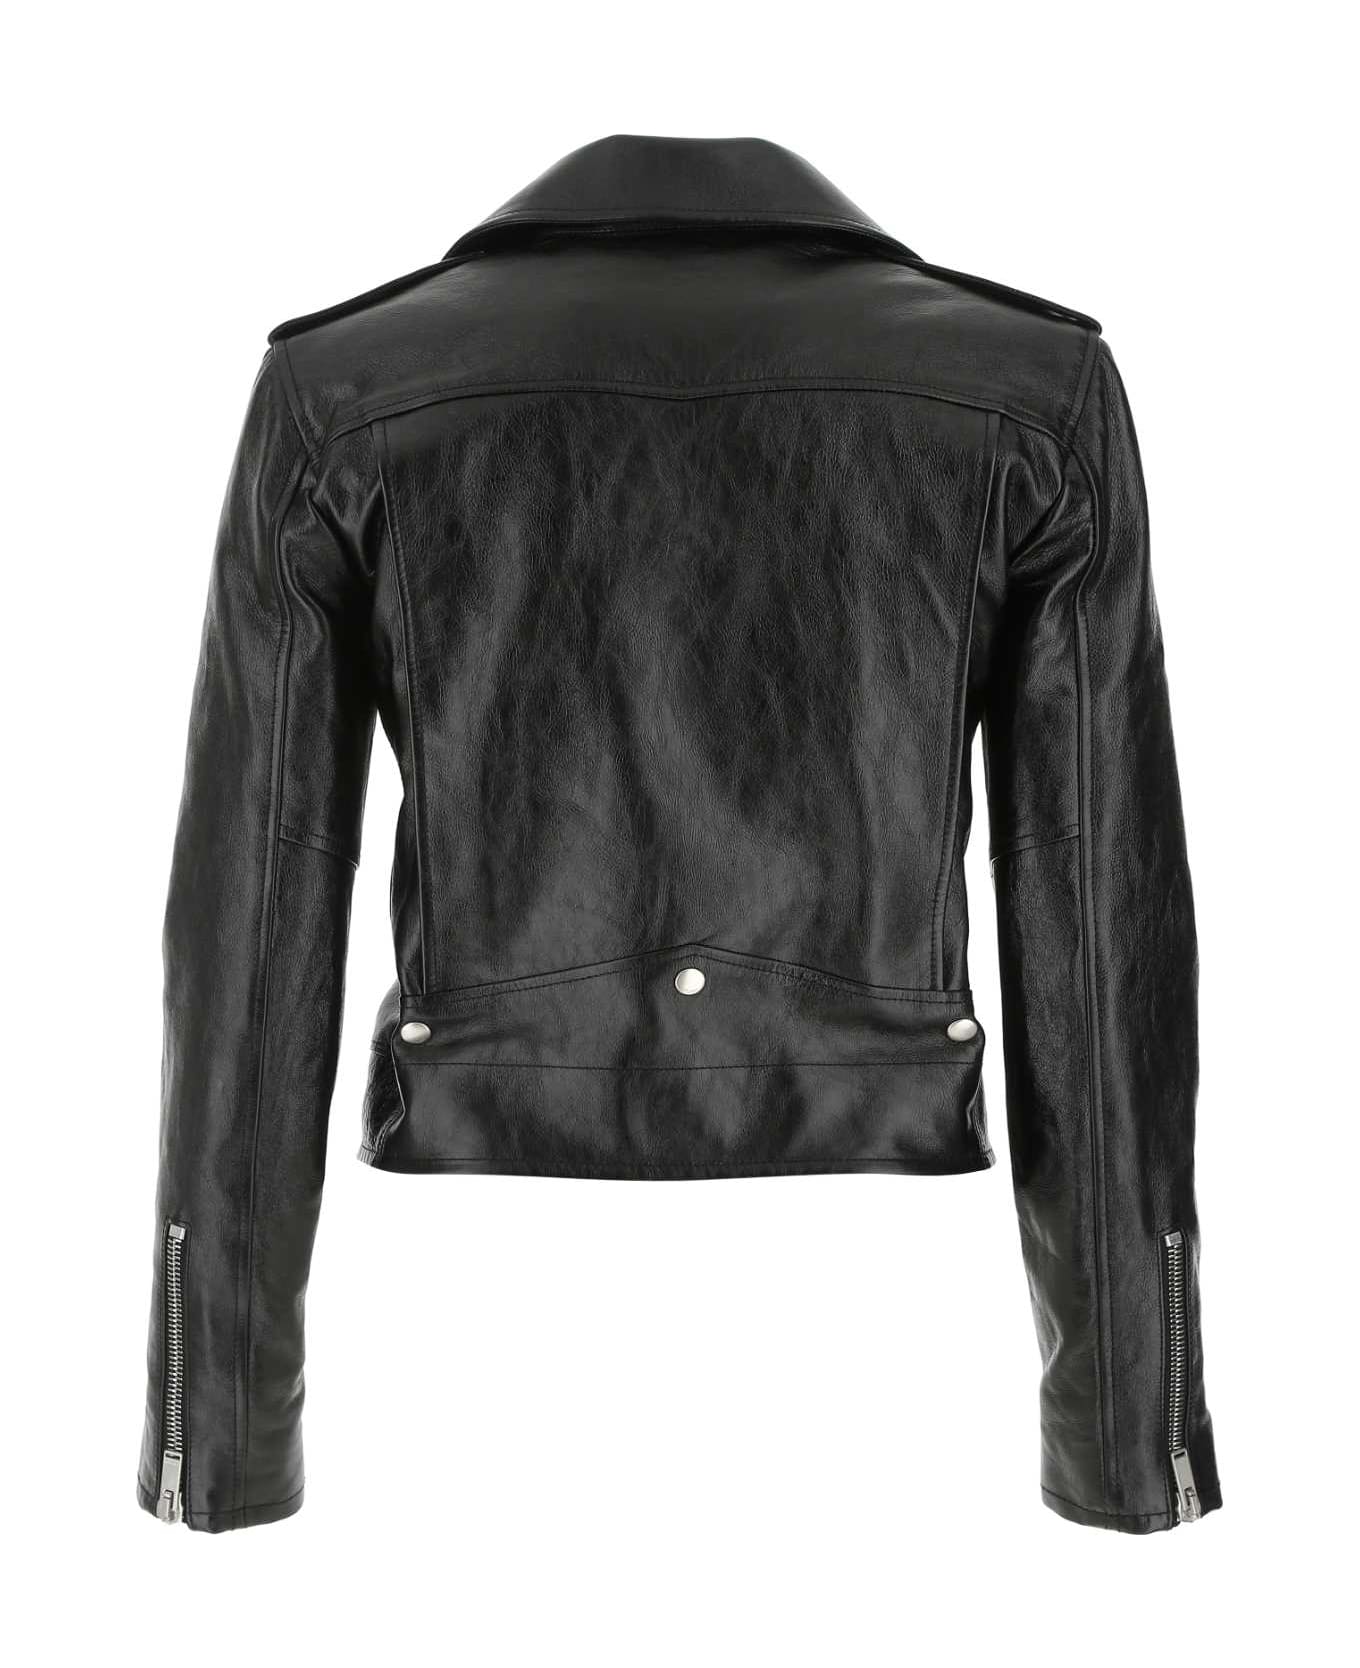 Saint Laurent Black Leather Jacket - 1000